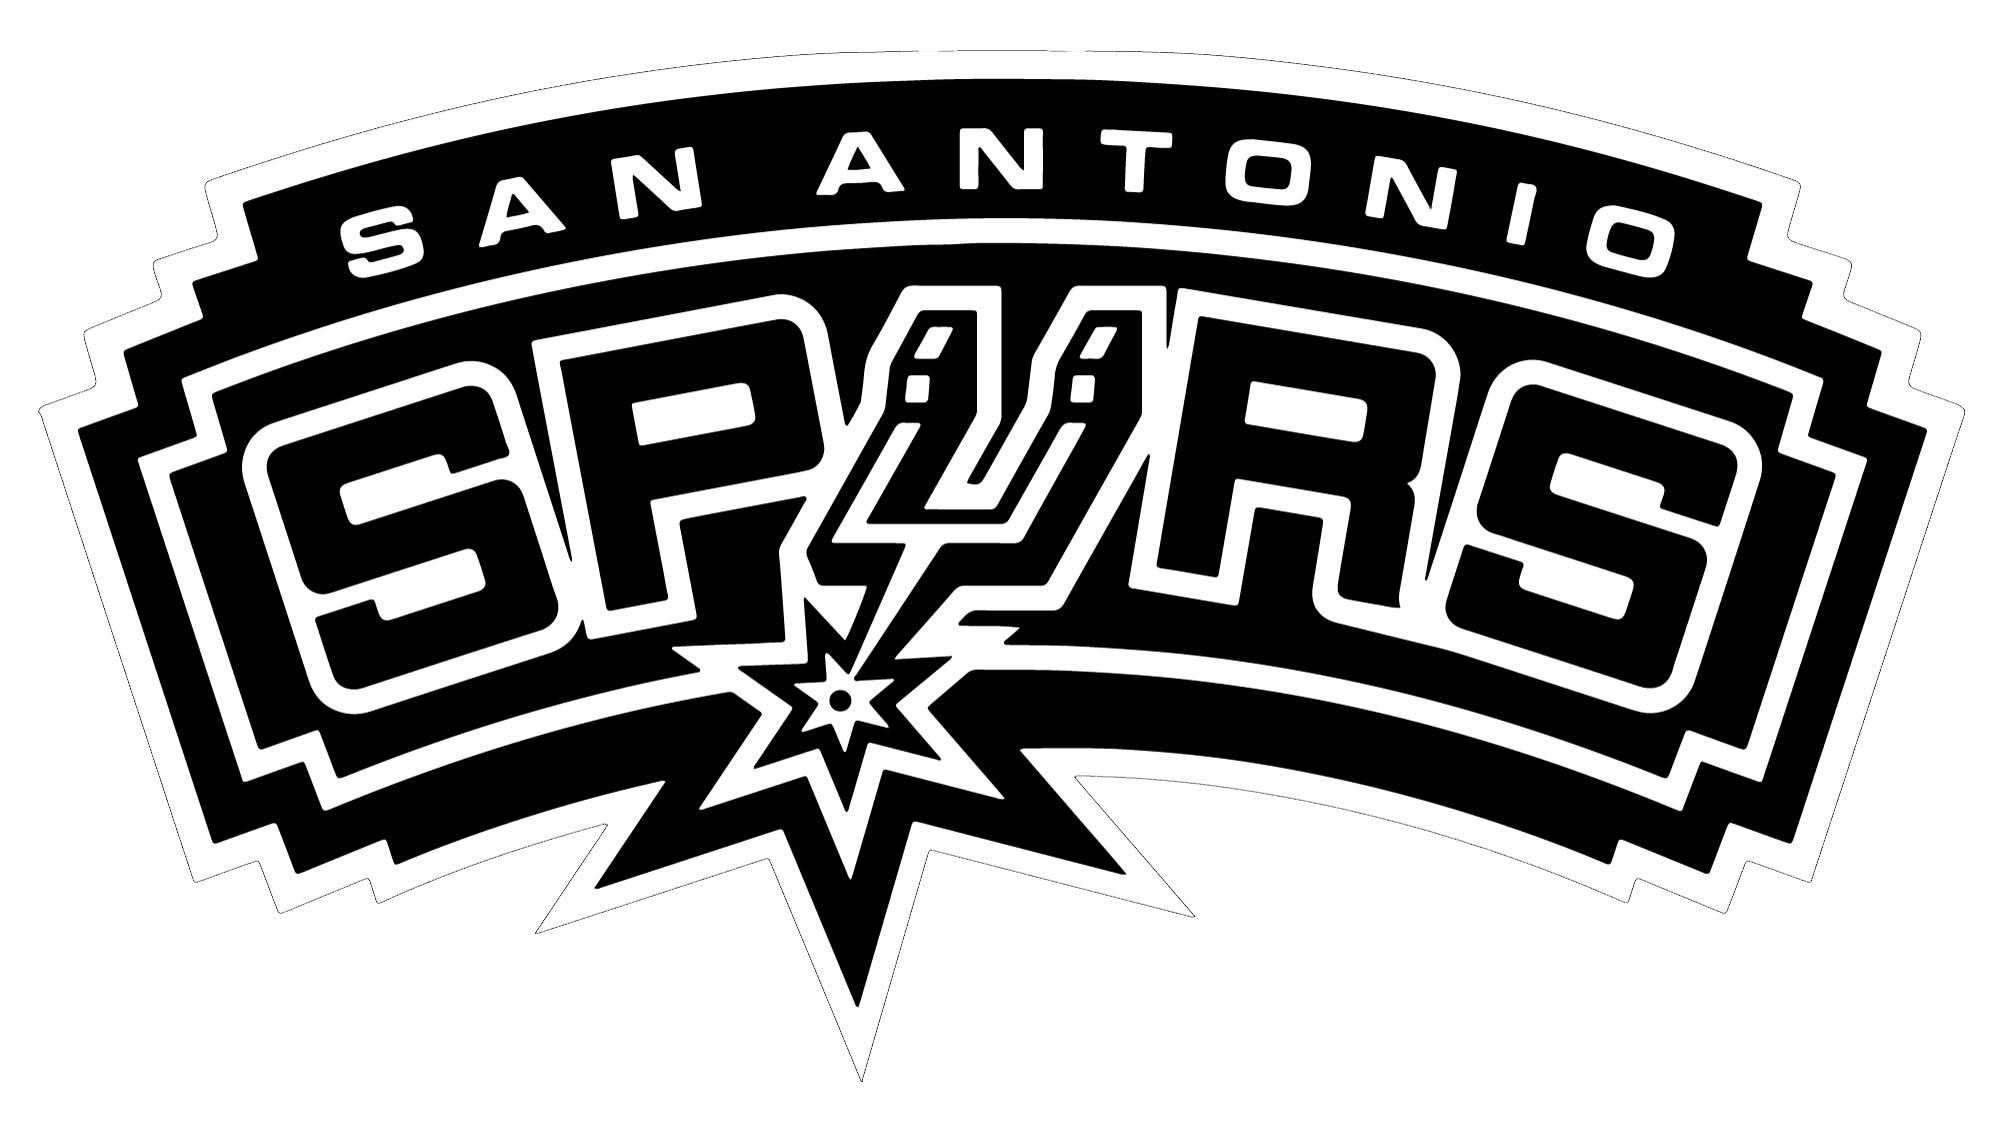 San Antonio Spurs logos, comp